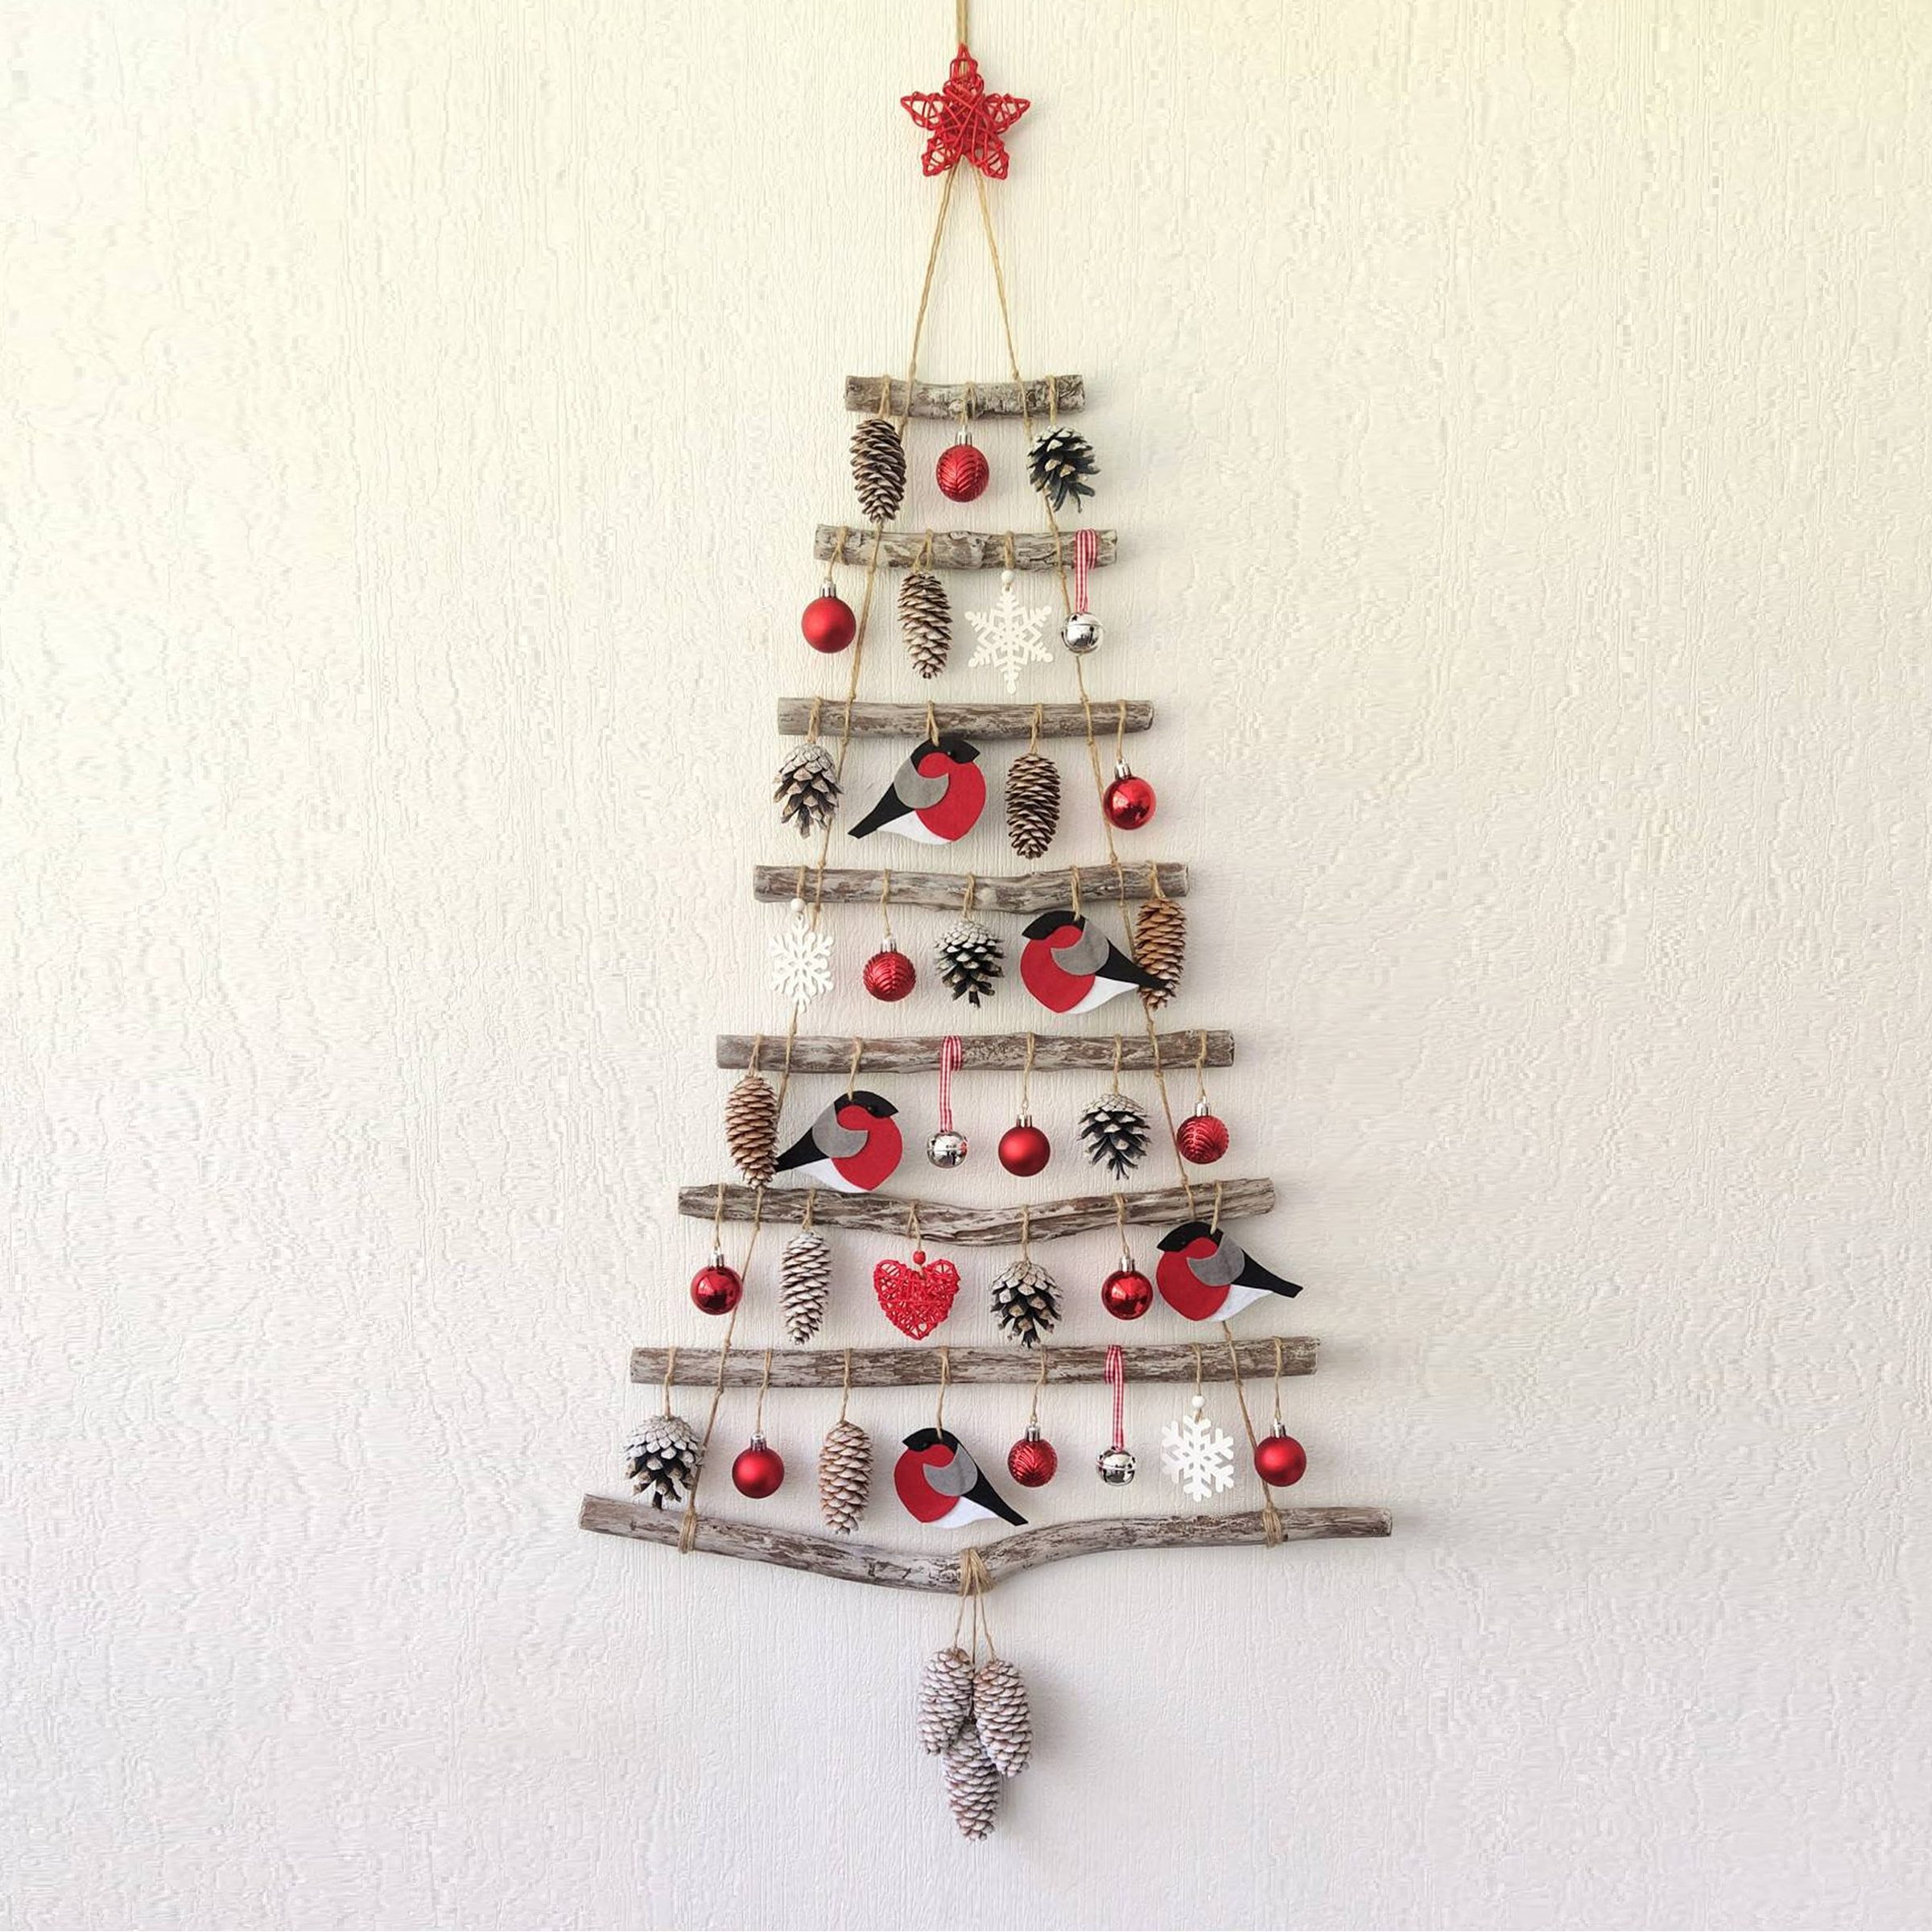 33 Fun and Festive Alternative Christmas Trees | Taste of Home